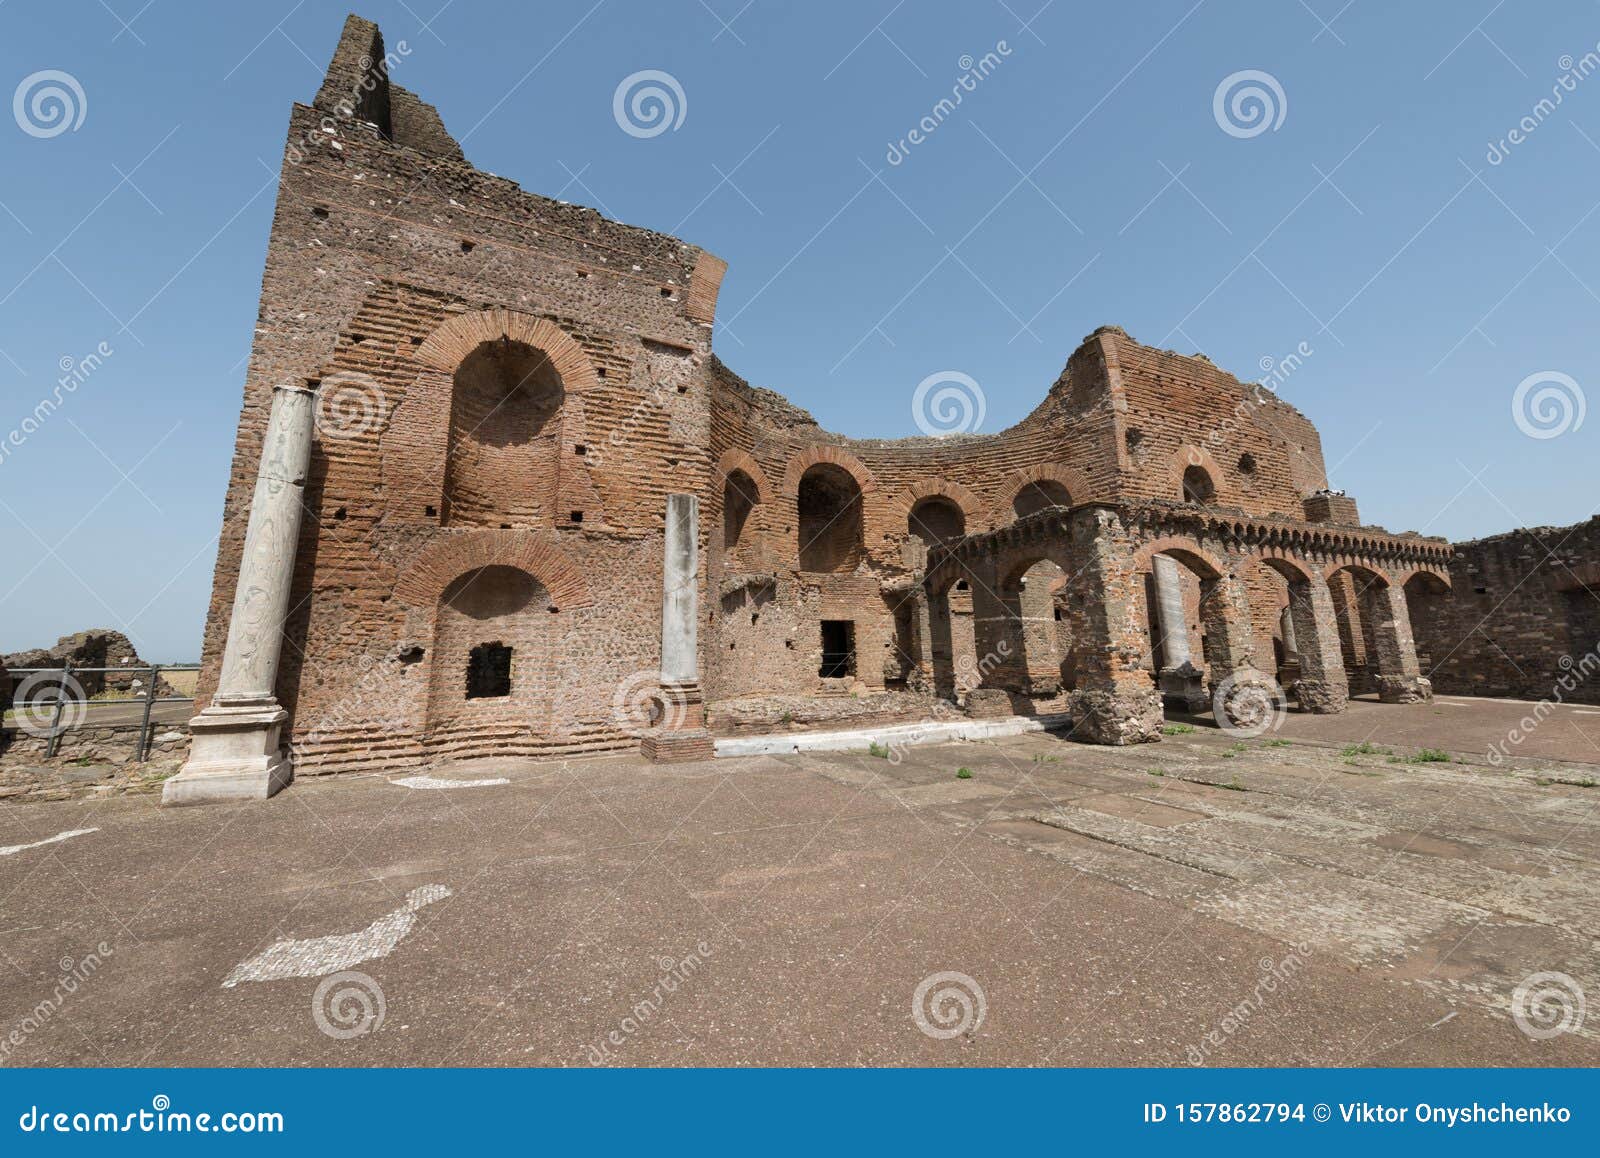 great nymphaeum of villa of the quintilii, rome, italy